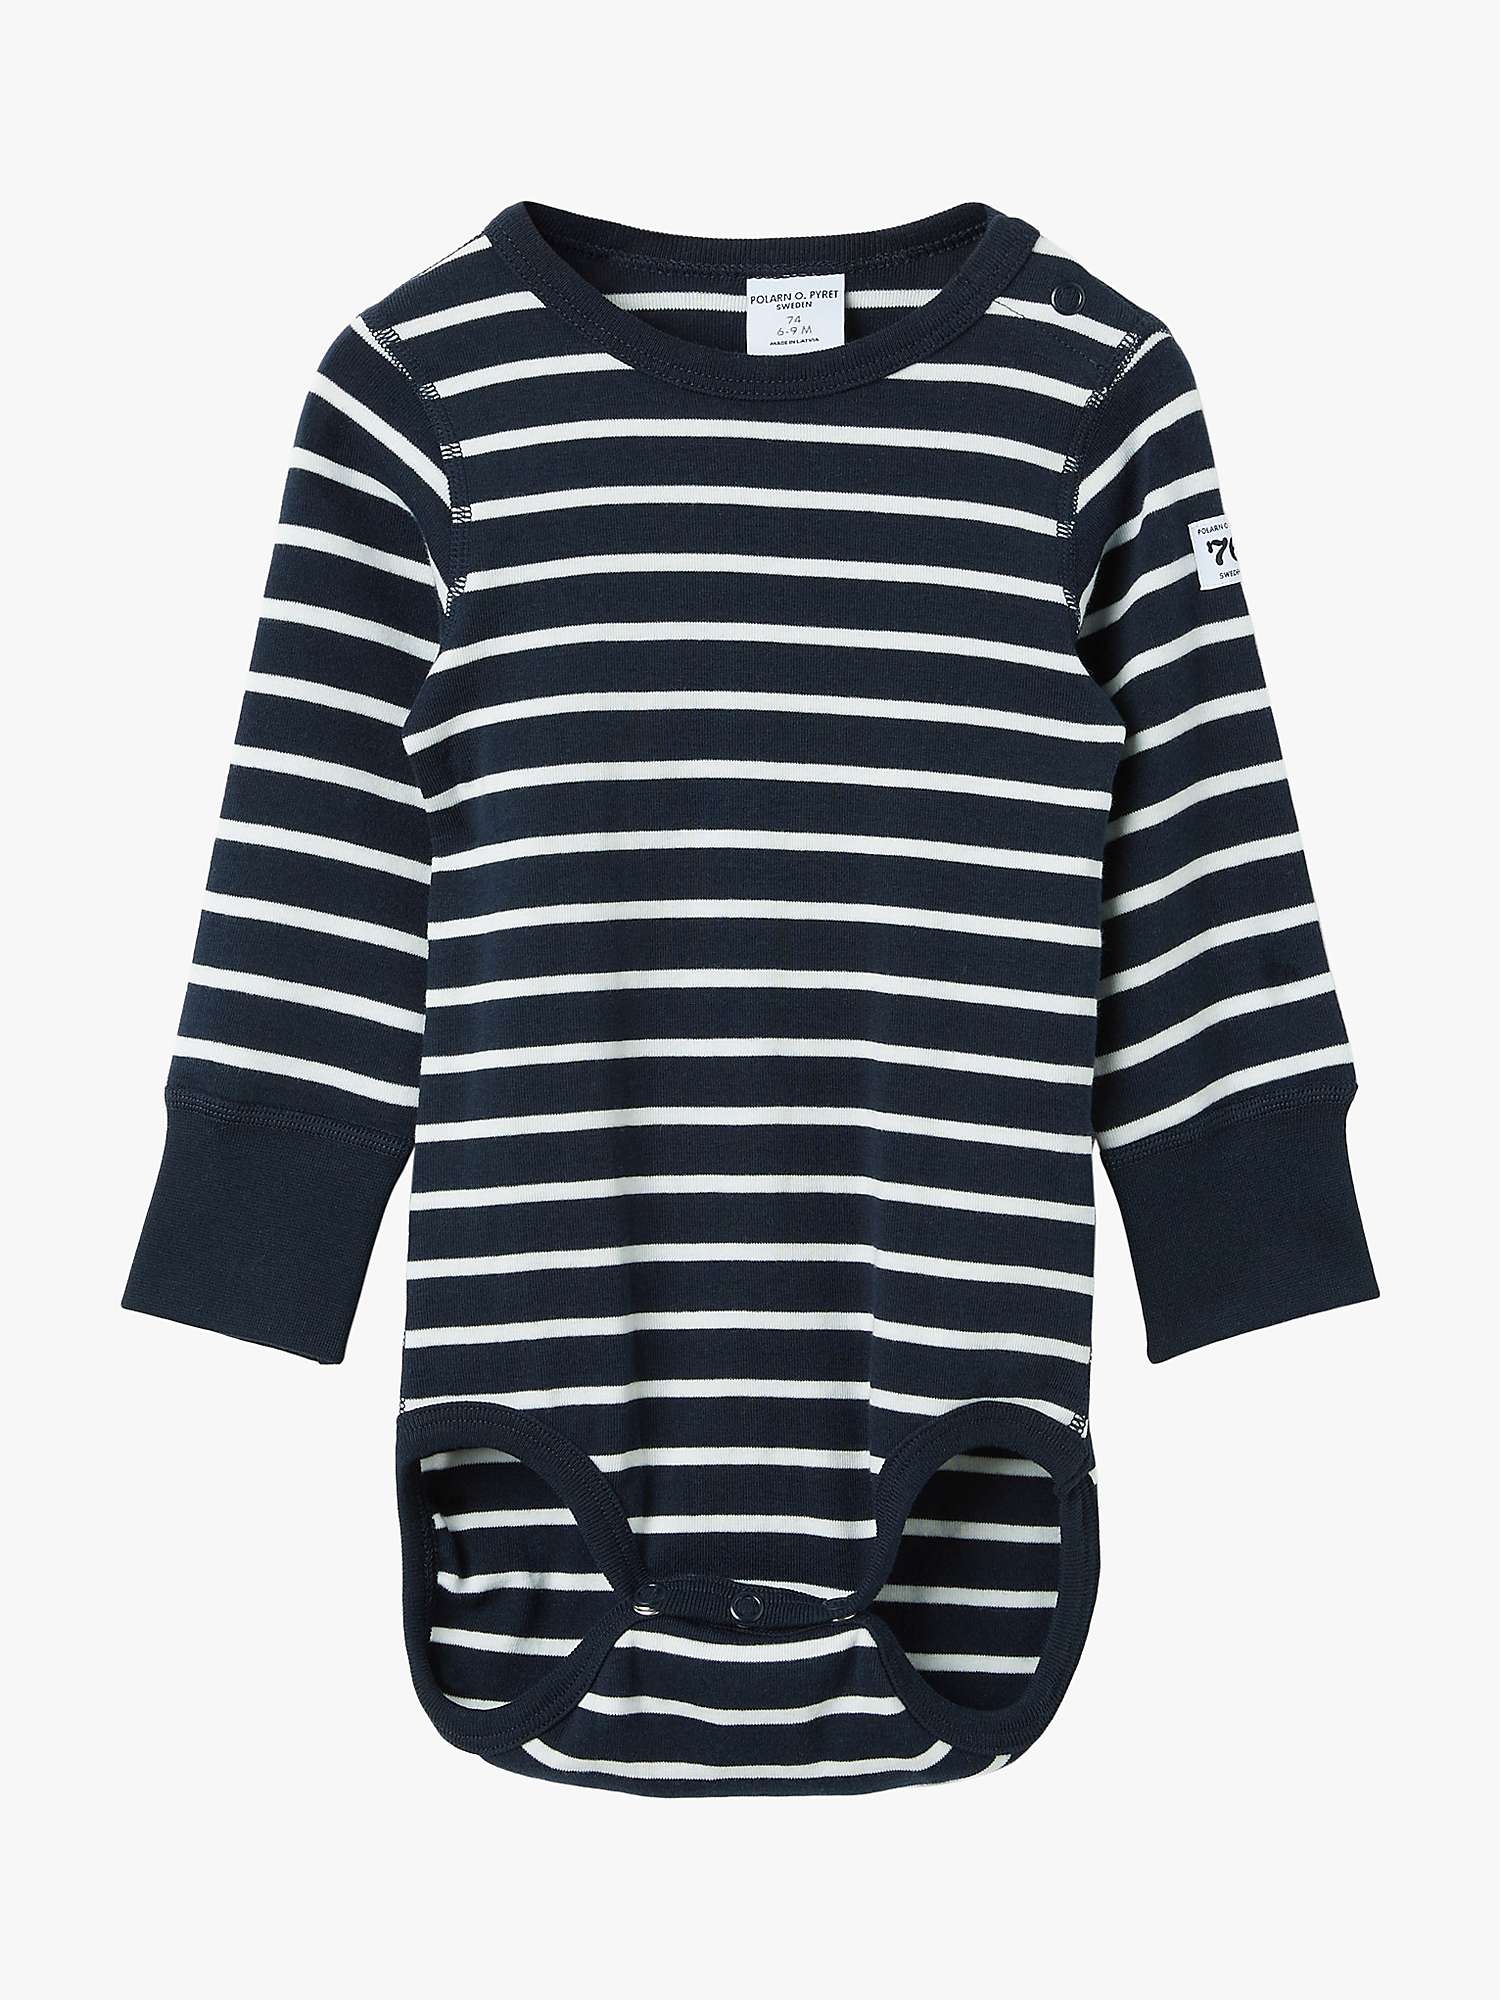 Buy Polarn O. Pyret Baby GOTS Organic Cotton Stripe Long Sleeve Bodysuit, Blue Online at johnlewis.com